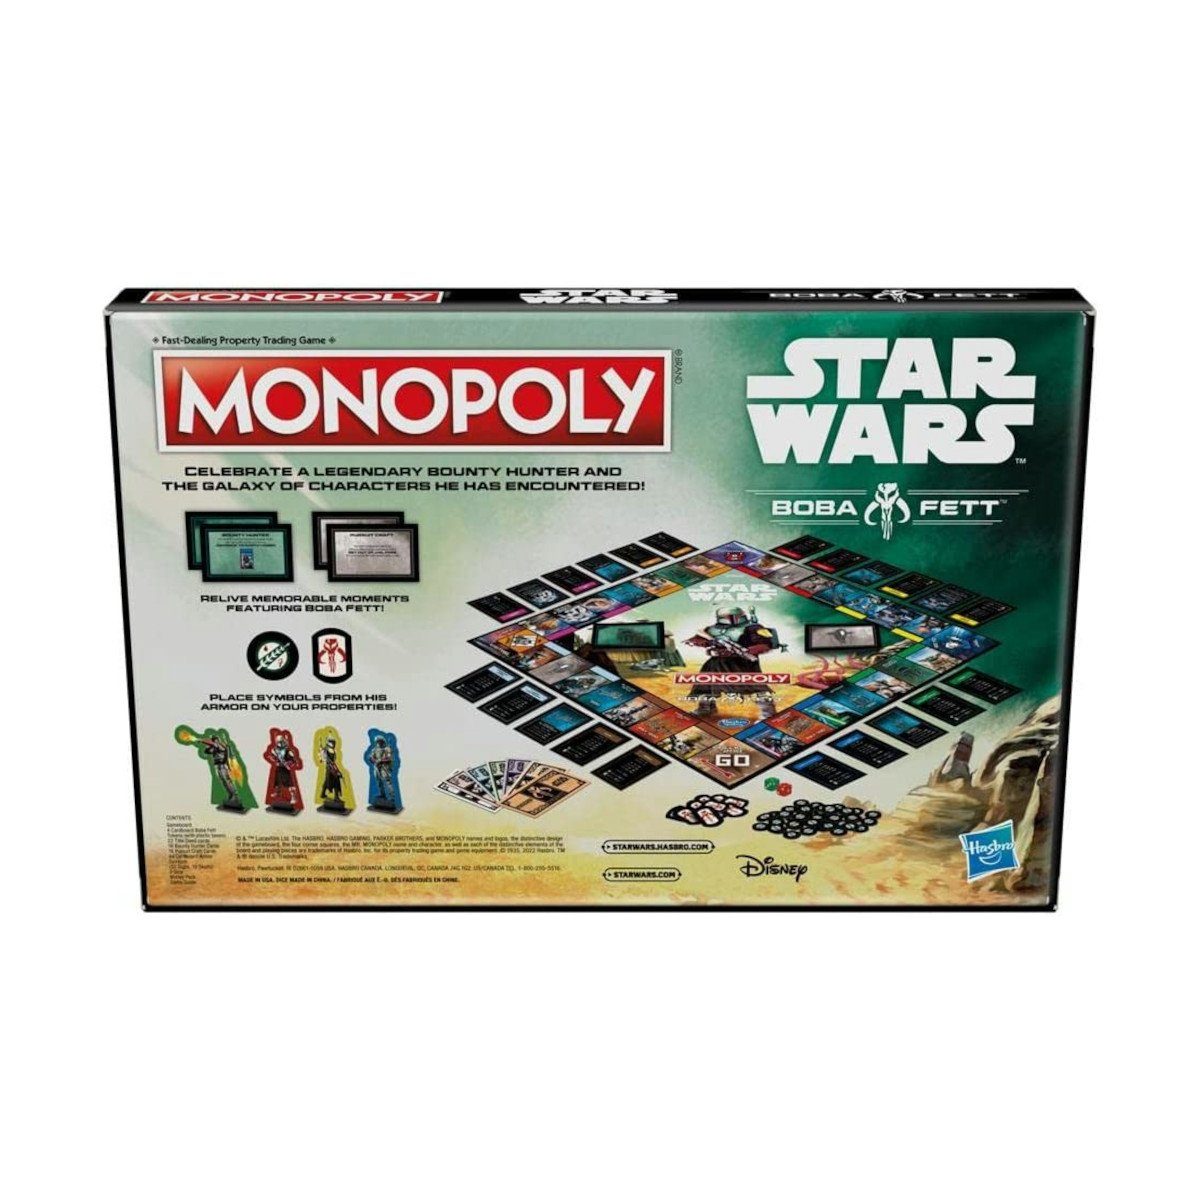 Fett Wars: Star (englisch) Brettspiel Spiel, Hasbro Monopoly - Boba